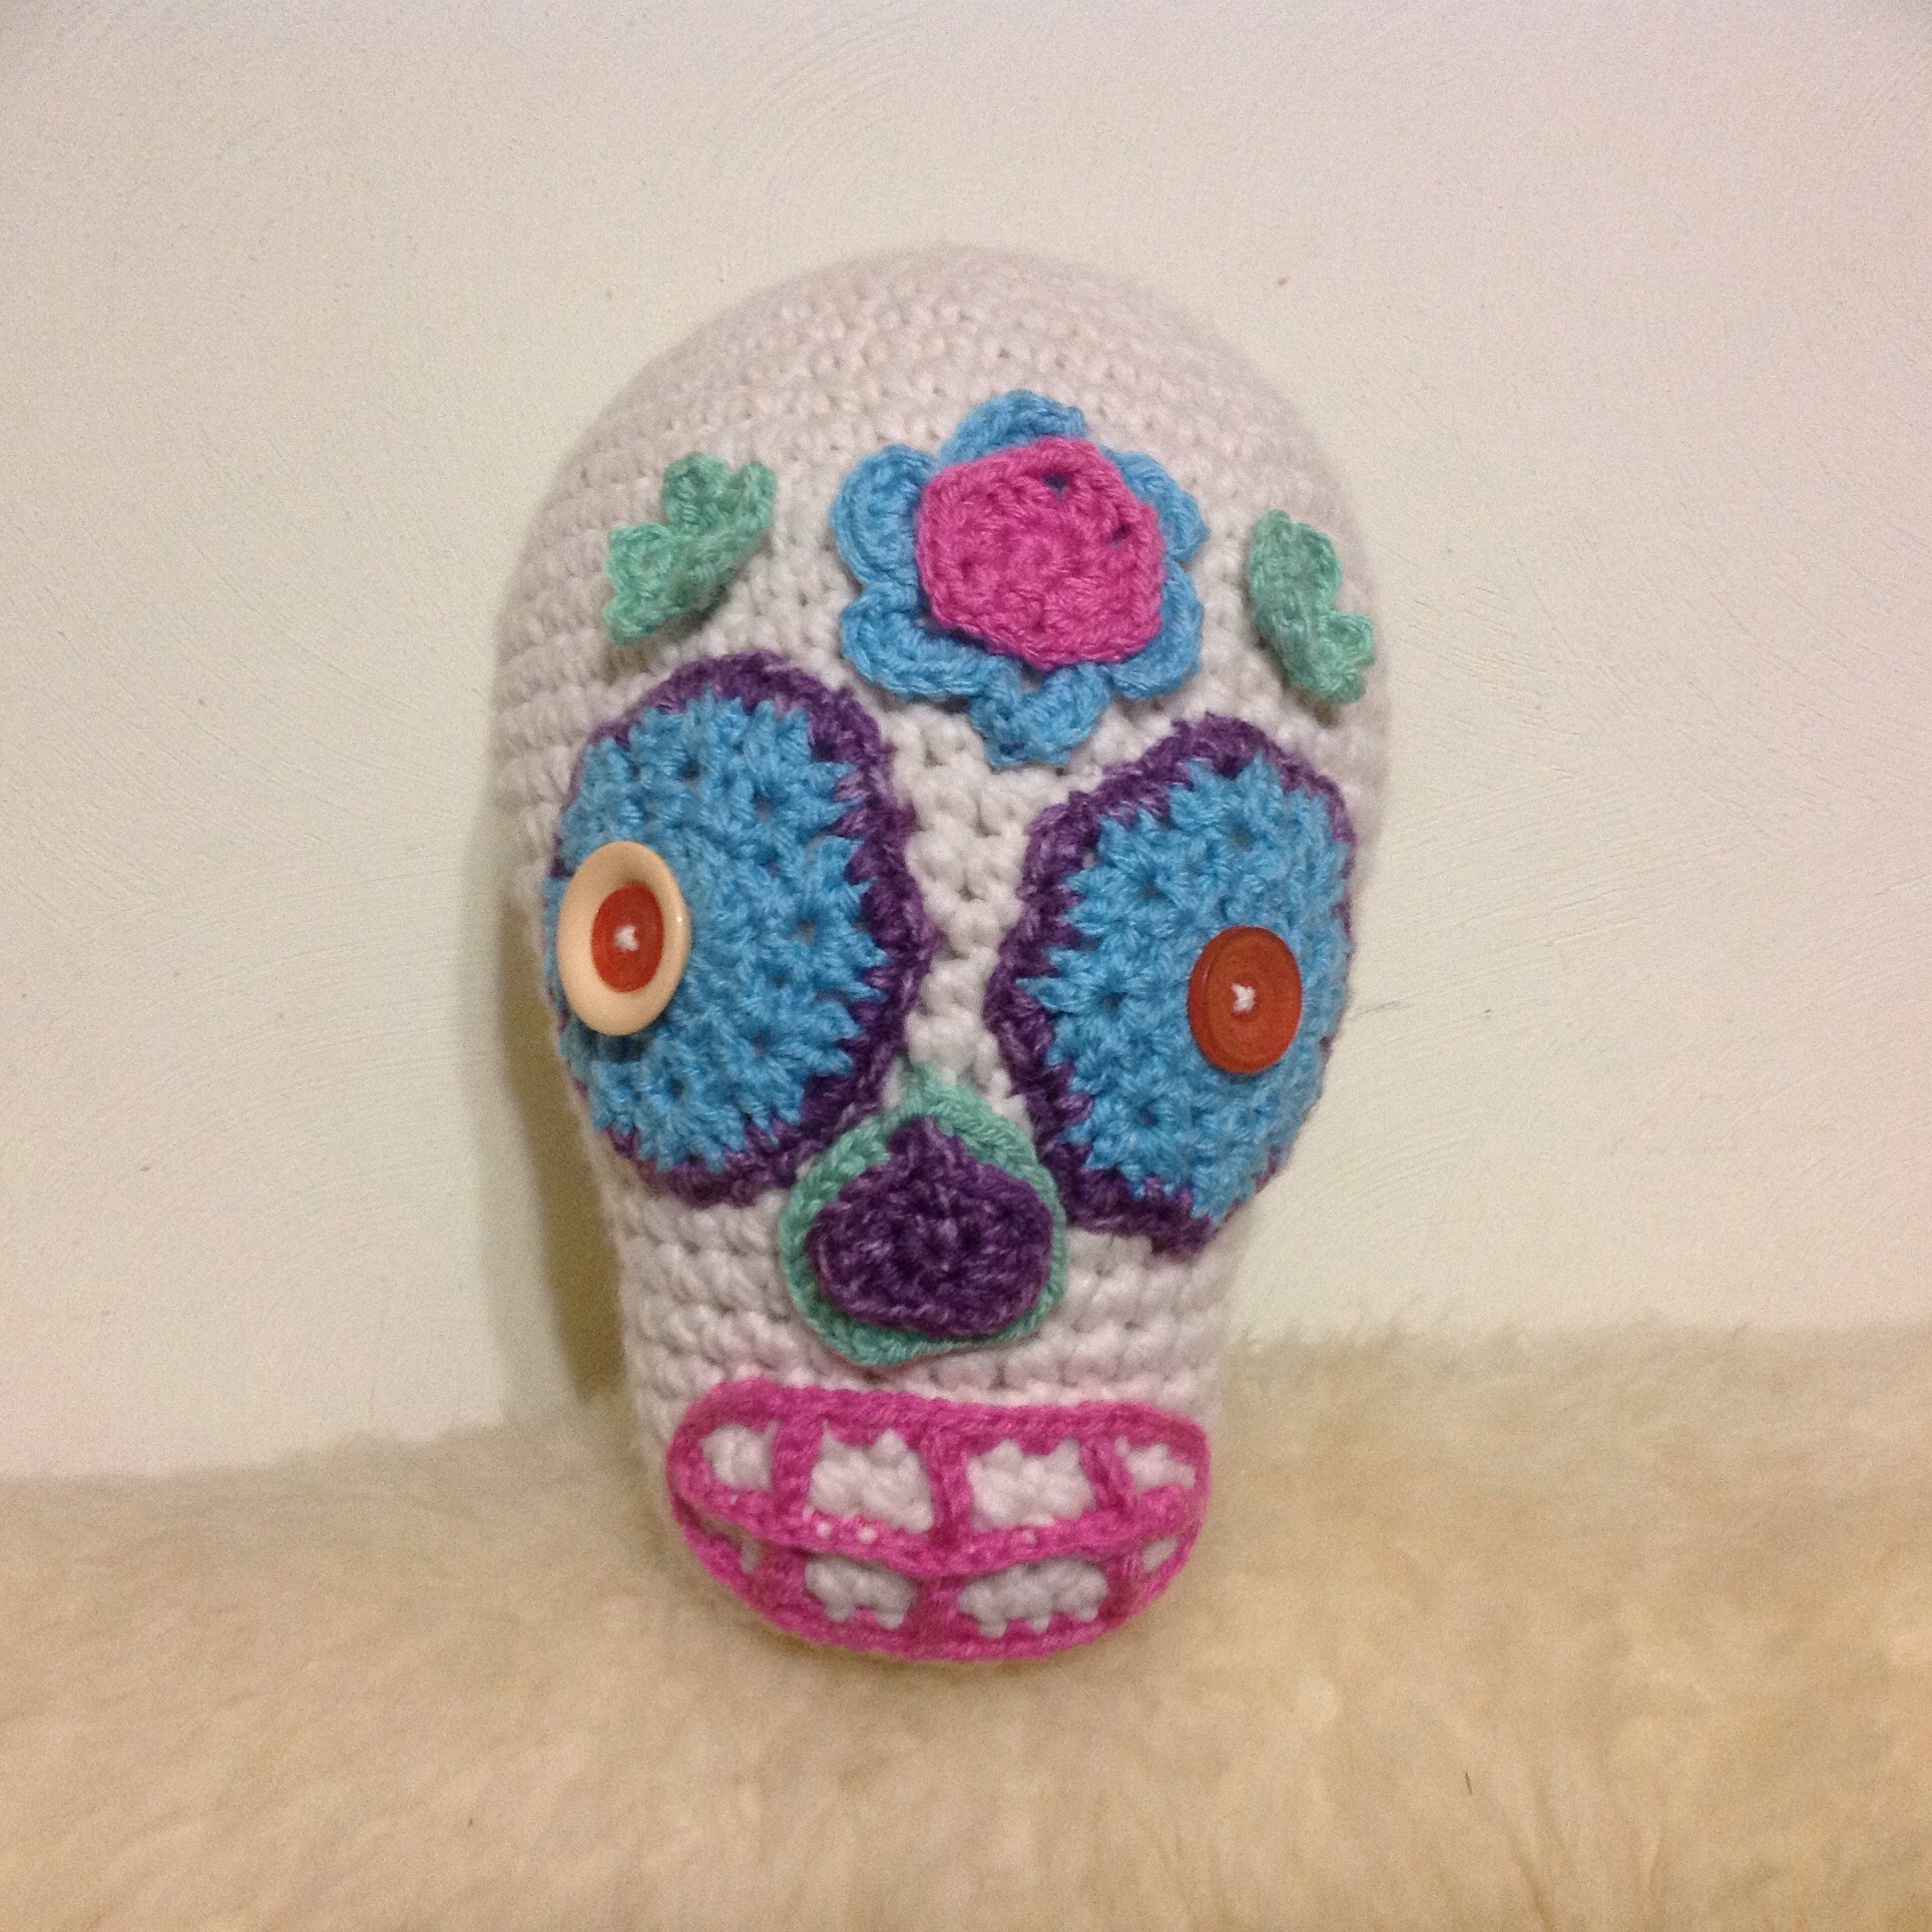 Finished crochet skull